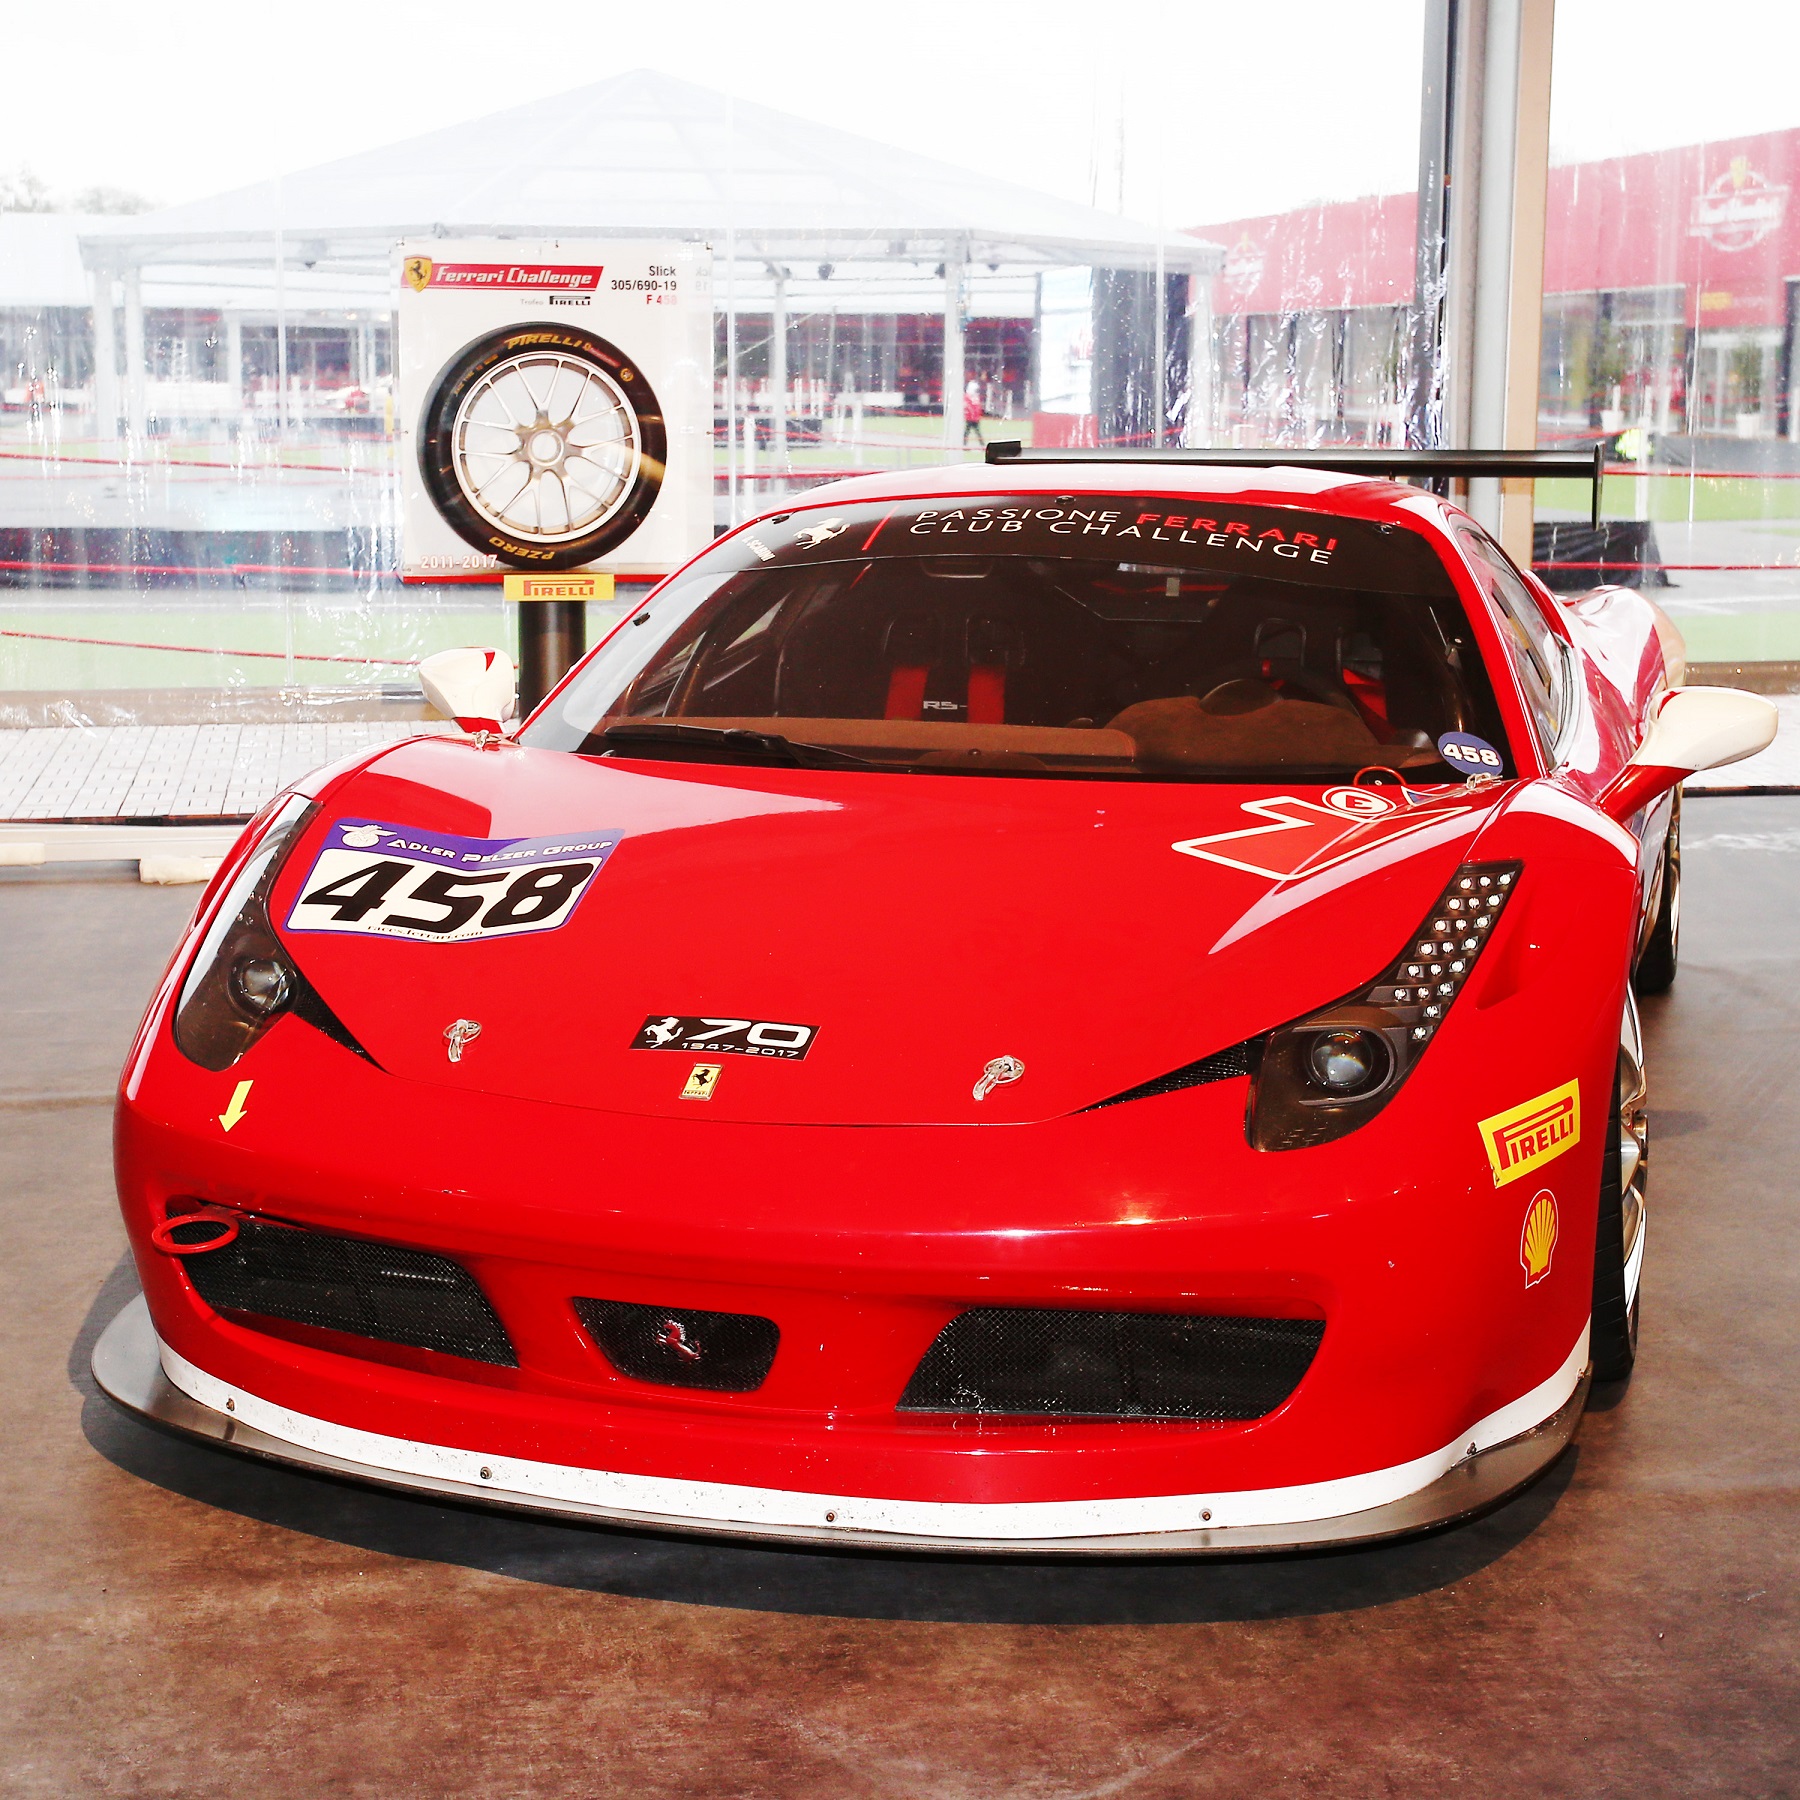 Pirelli to Use Ferrari Finali Mondiali to Showcase Technical Evolution of Ferrari GT Tires